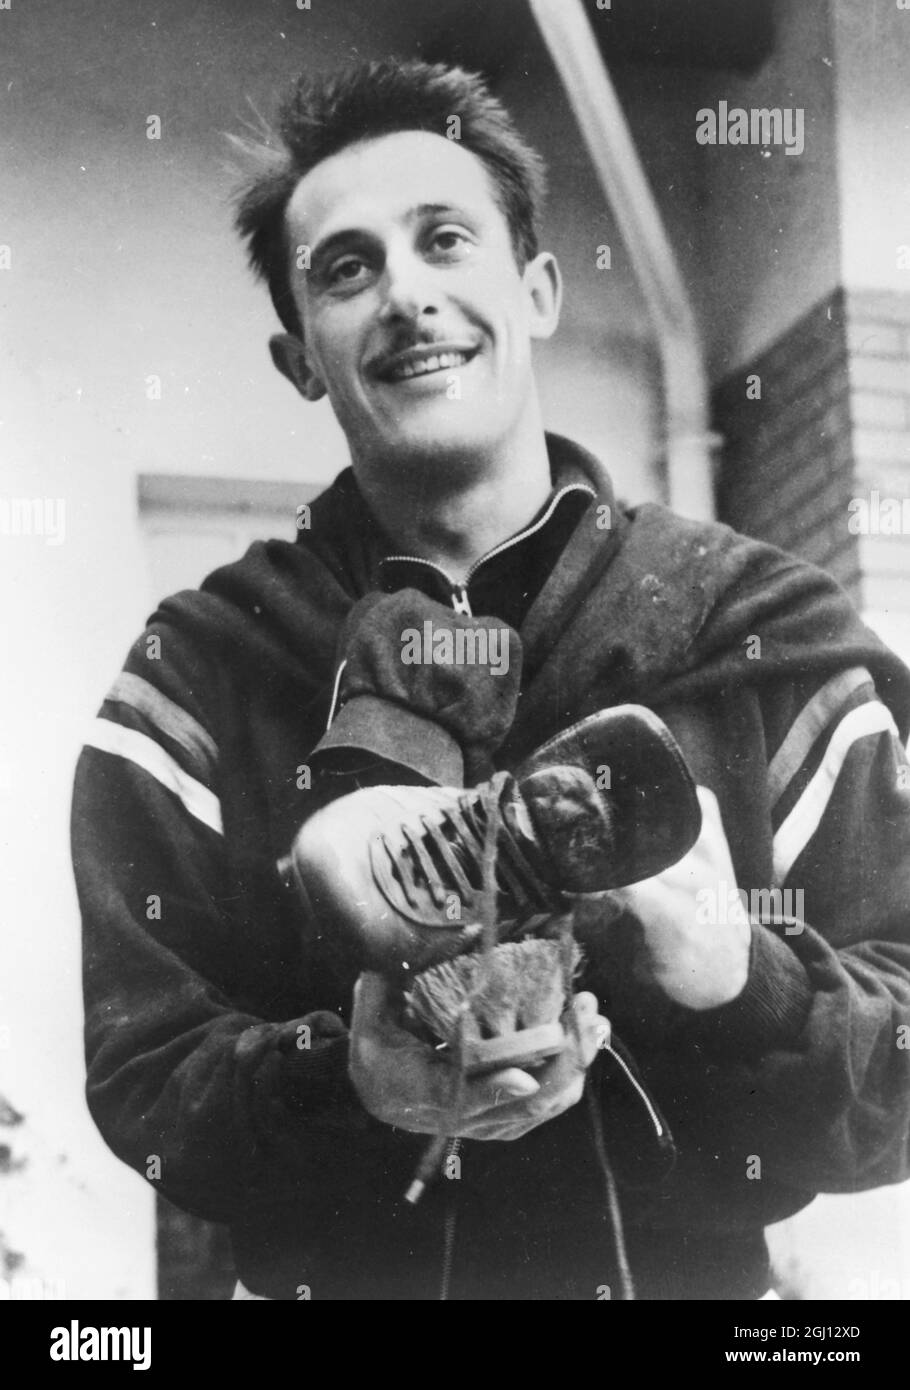 JEAN WENDLING - PORTRAIT FRENCH INTERNATIONAL FOOTBALLER 15 DECEMBER 1961  Stock Photo - Alamy